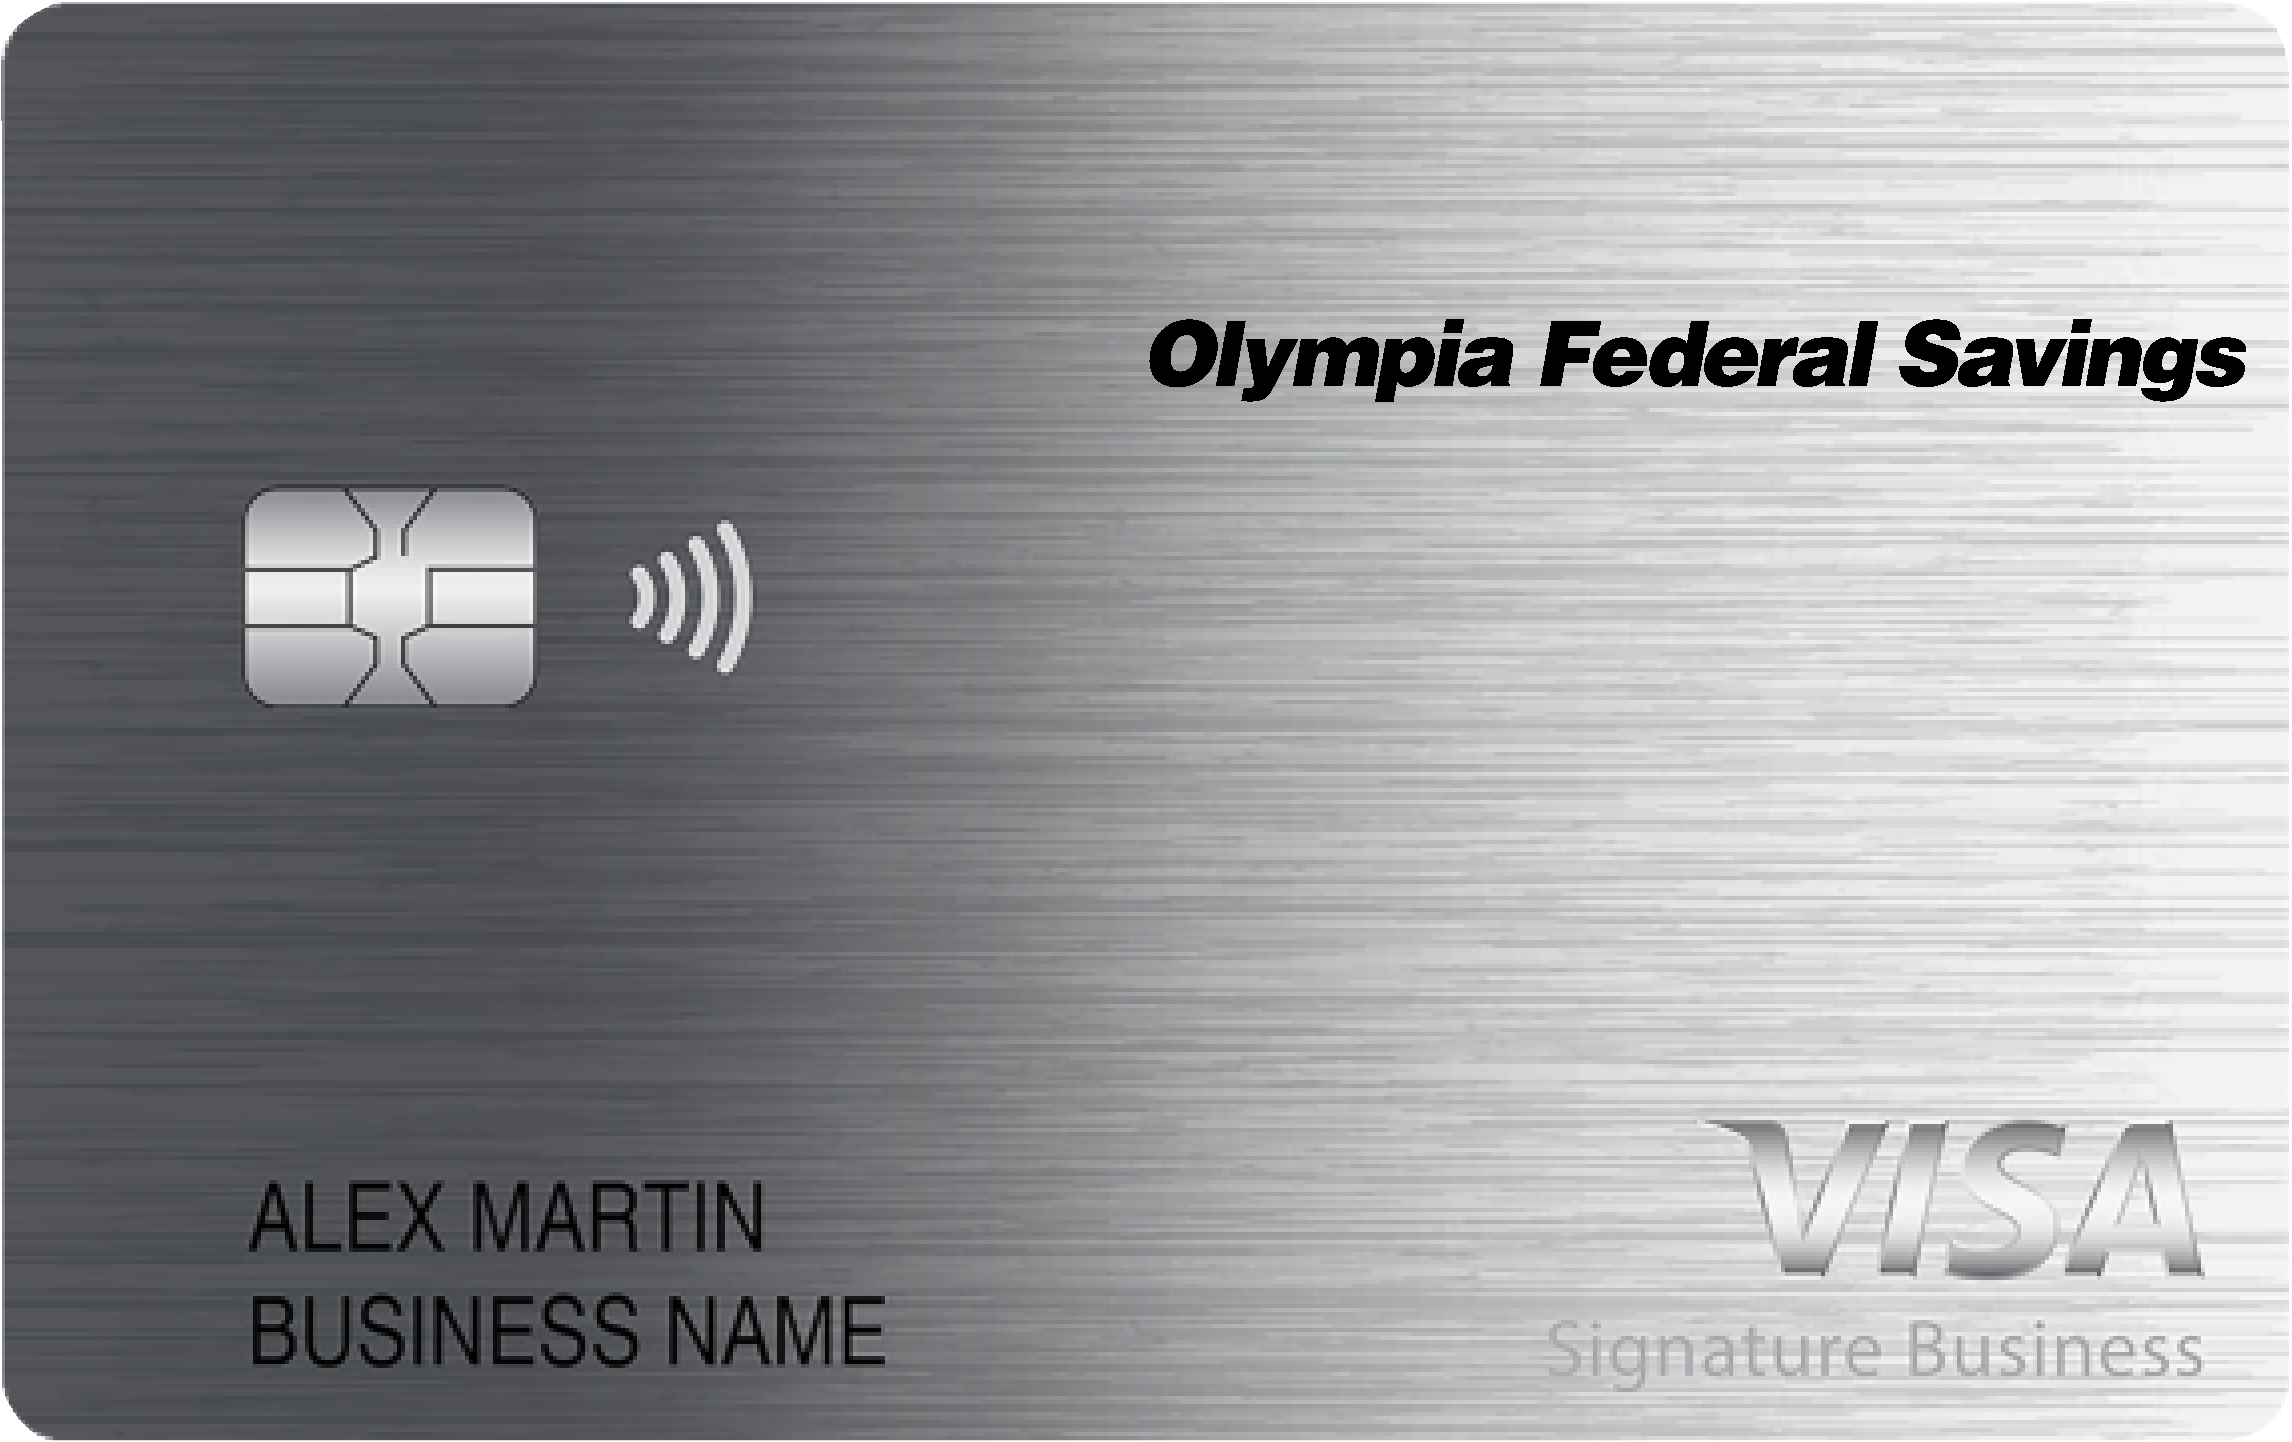 Olympia Federal Savings